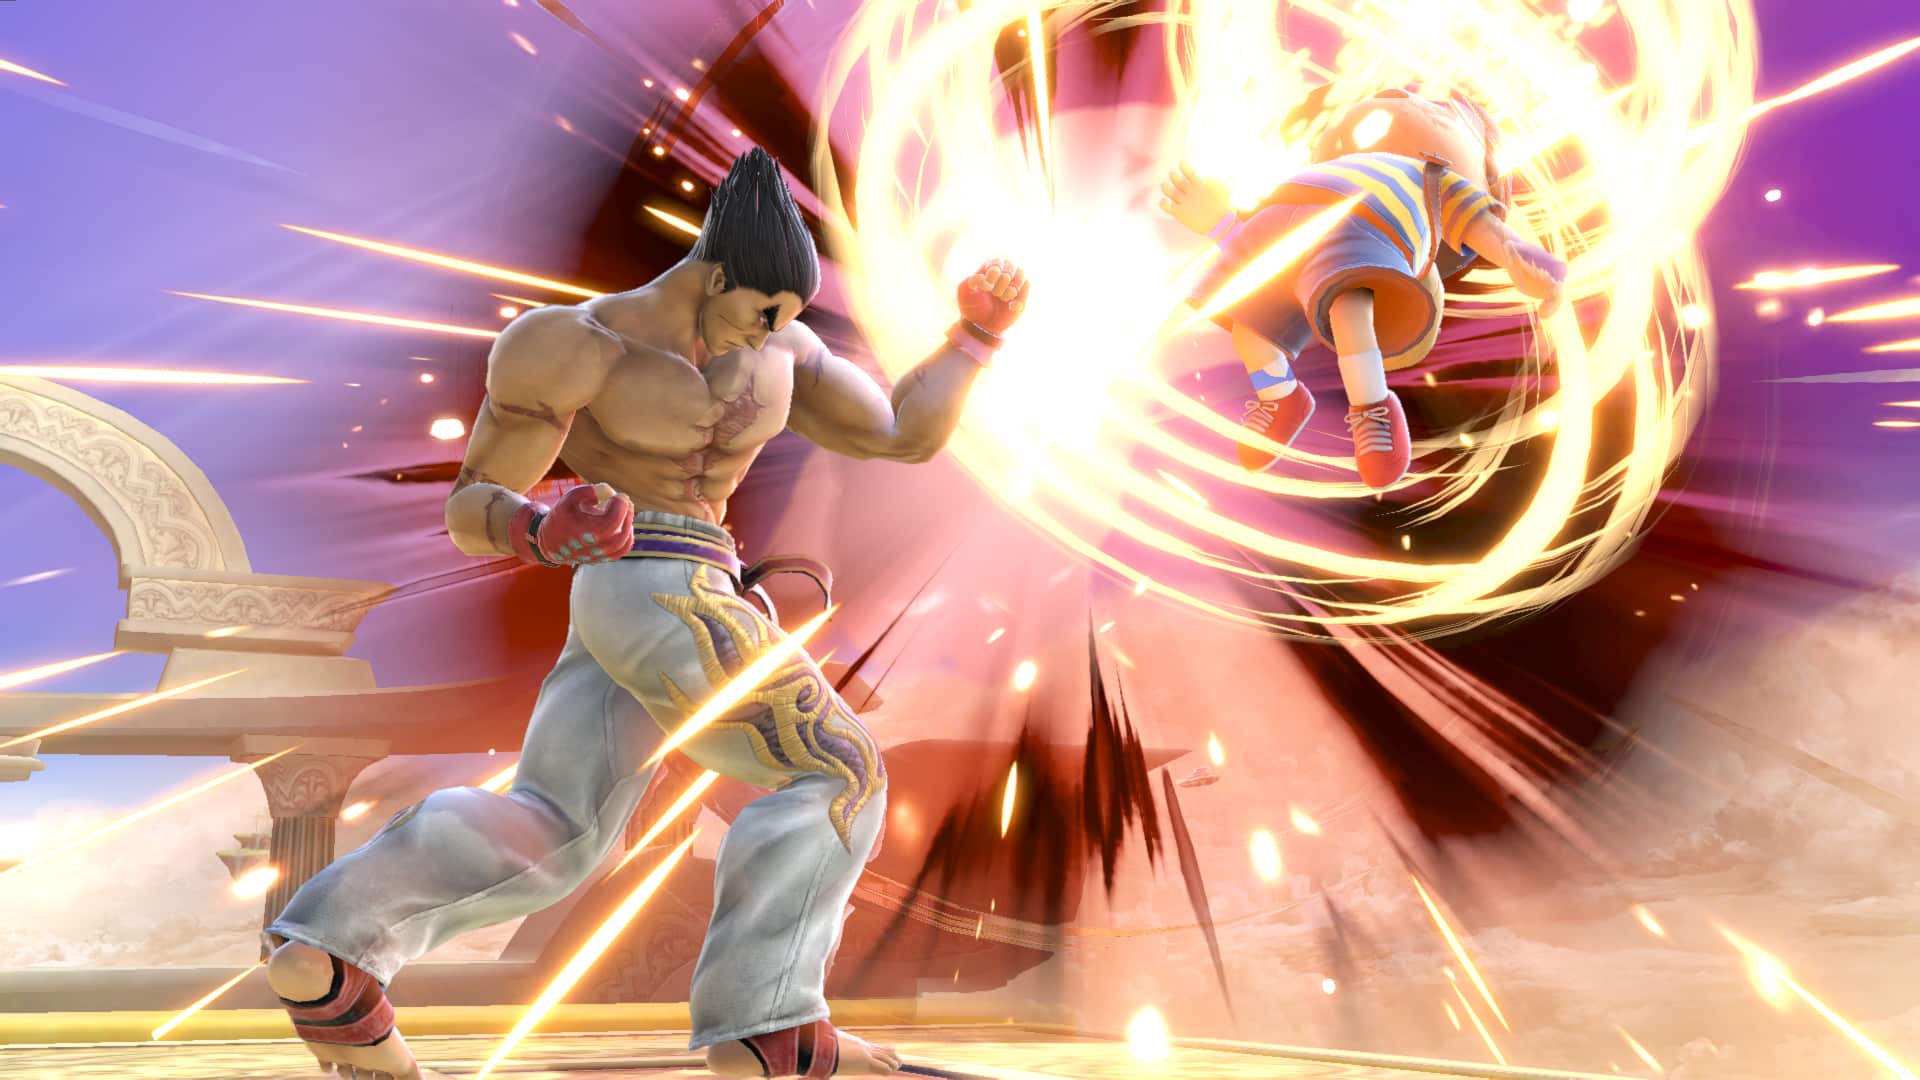 Kazuya Mishima coming to Super Smash Bros. Ultimate on June 29